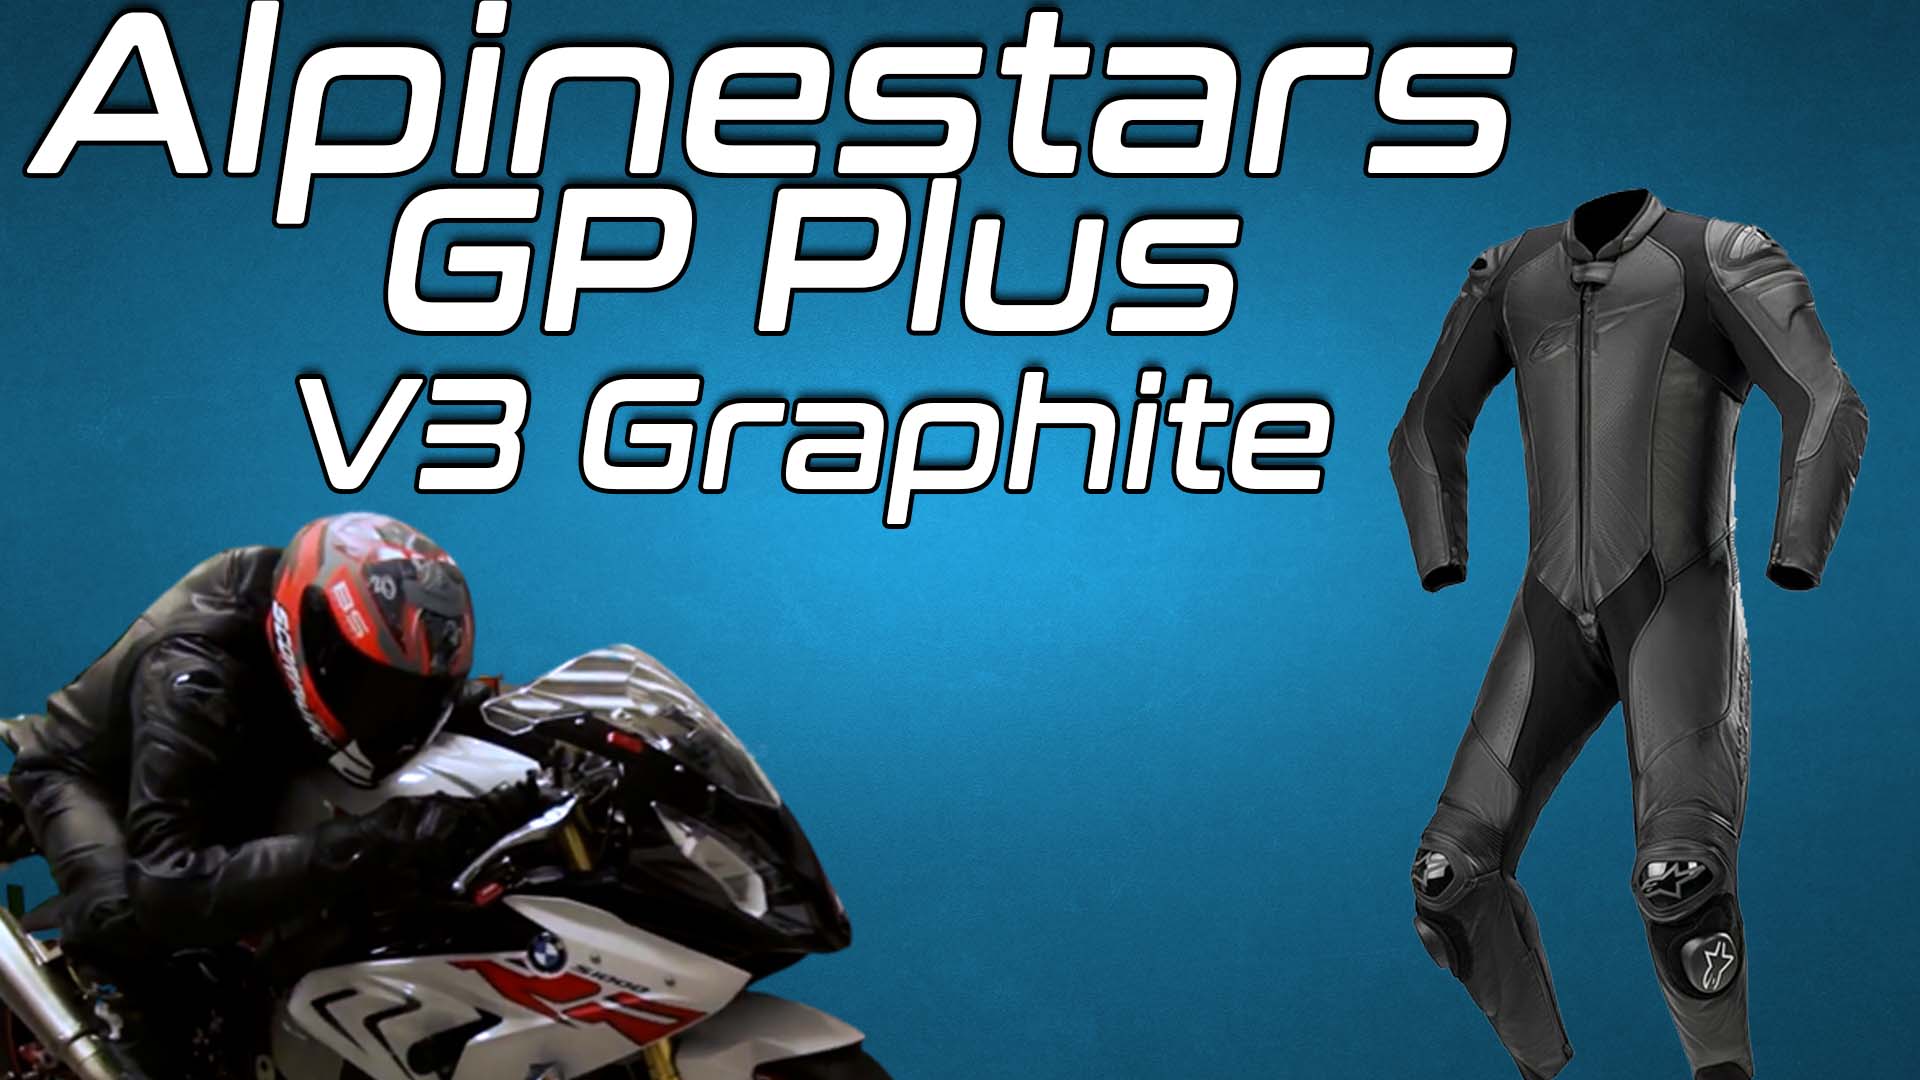 Alpinestars GP Plus V3 Graphite One Piece Leather Race Suit